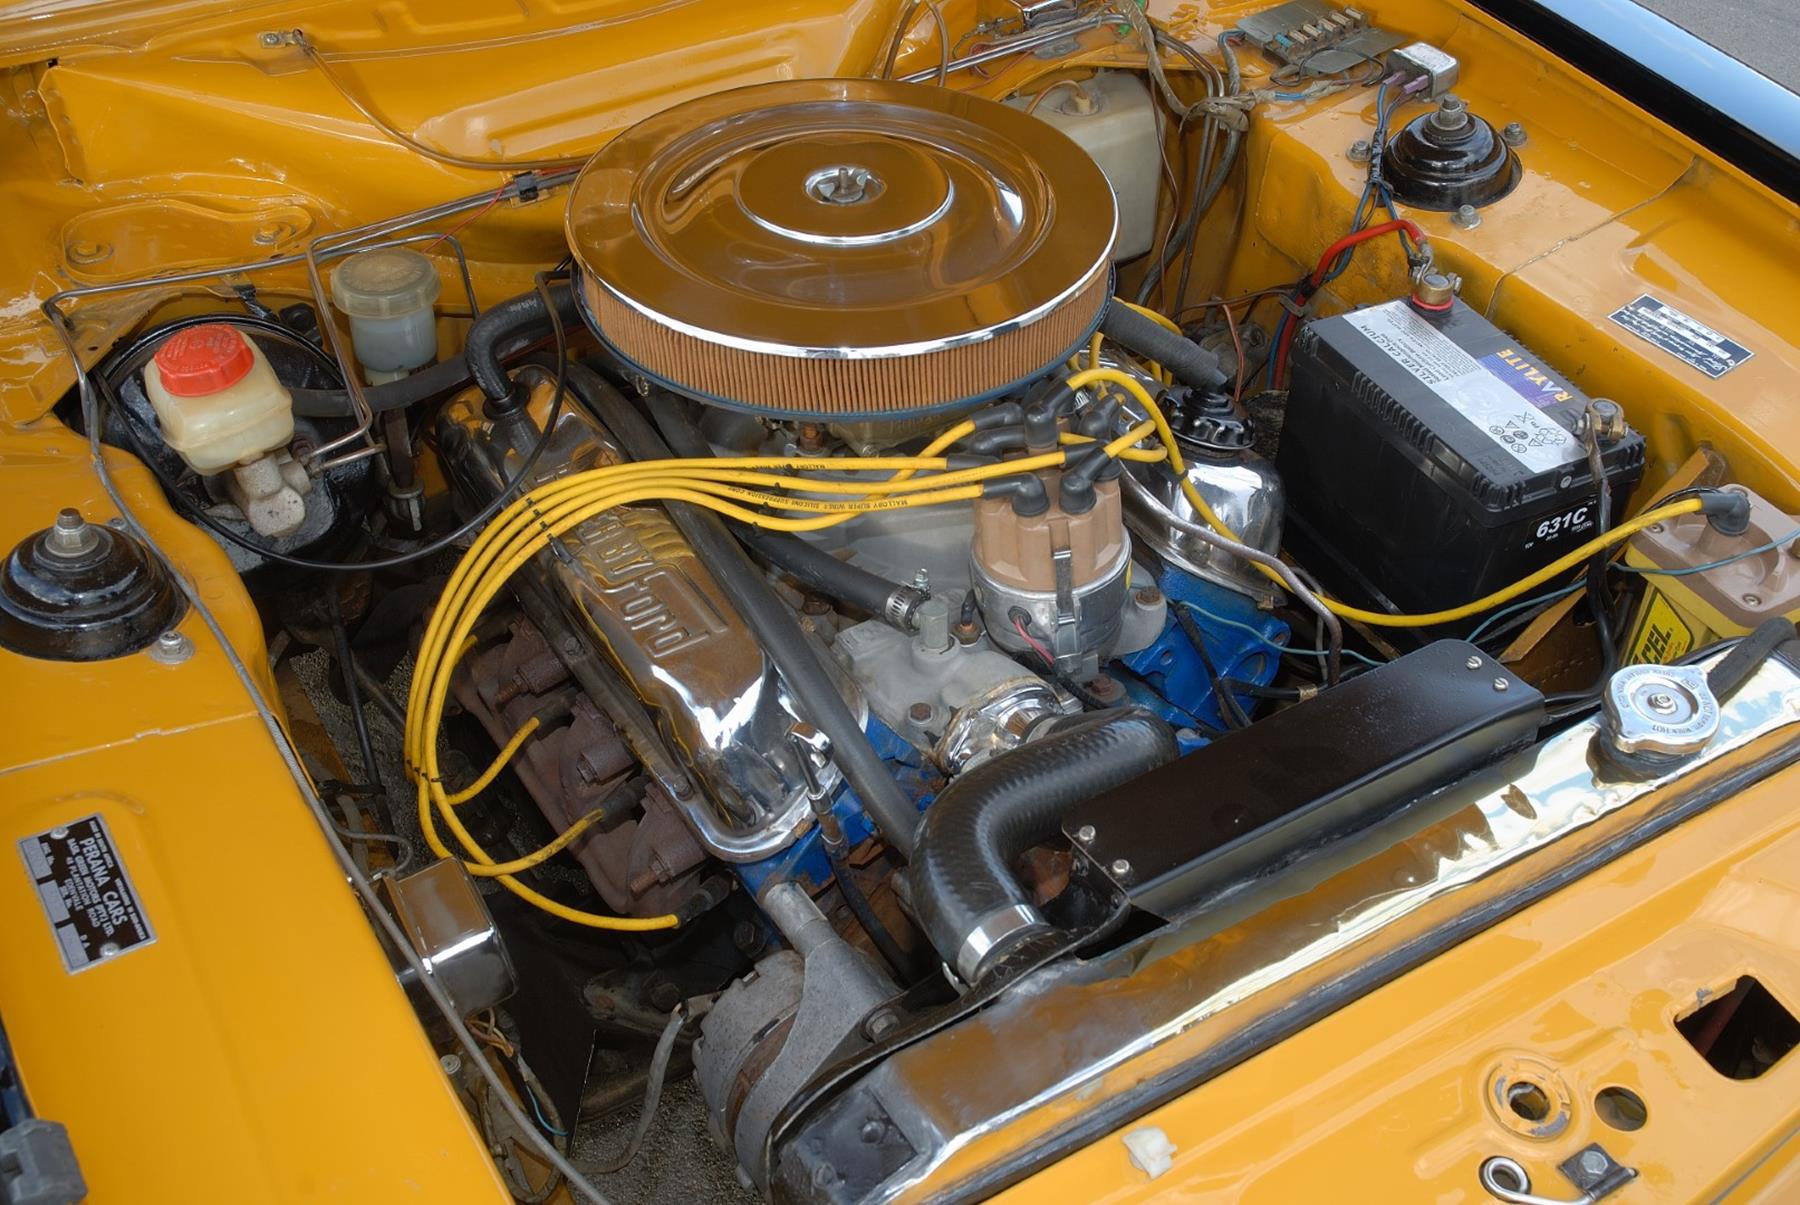 Basil Green: SA's iconic Ford Capri Perana V6 creator will be remembered  forever